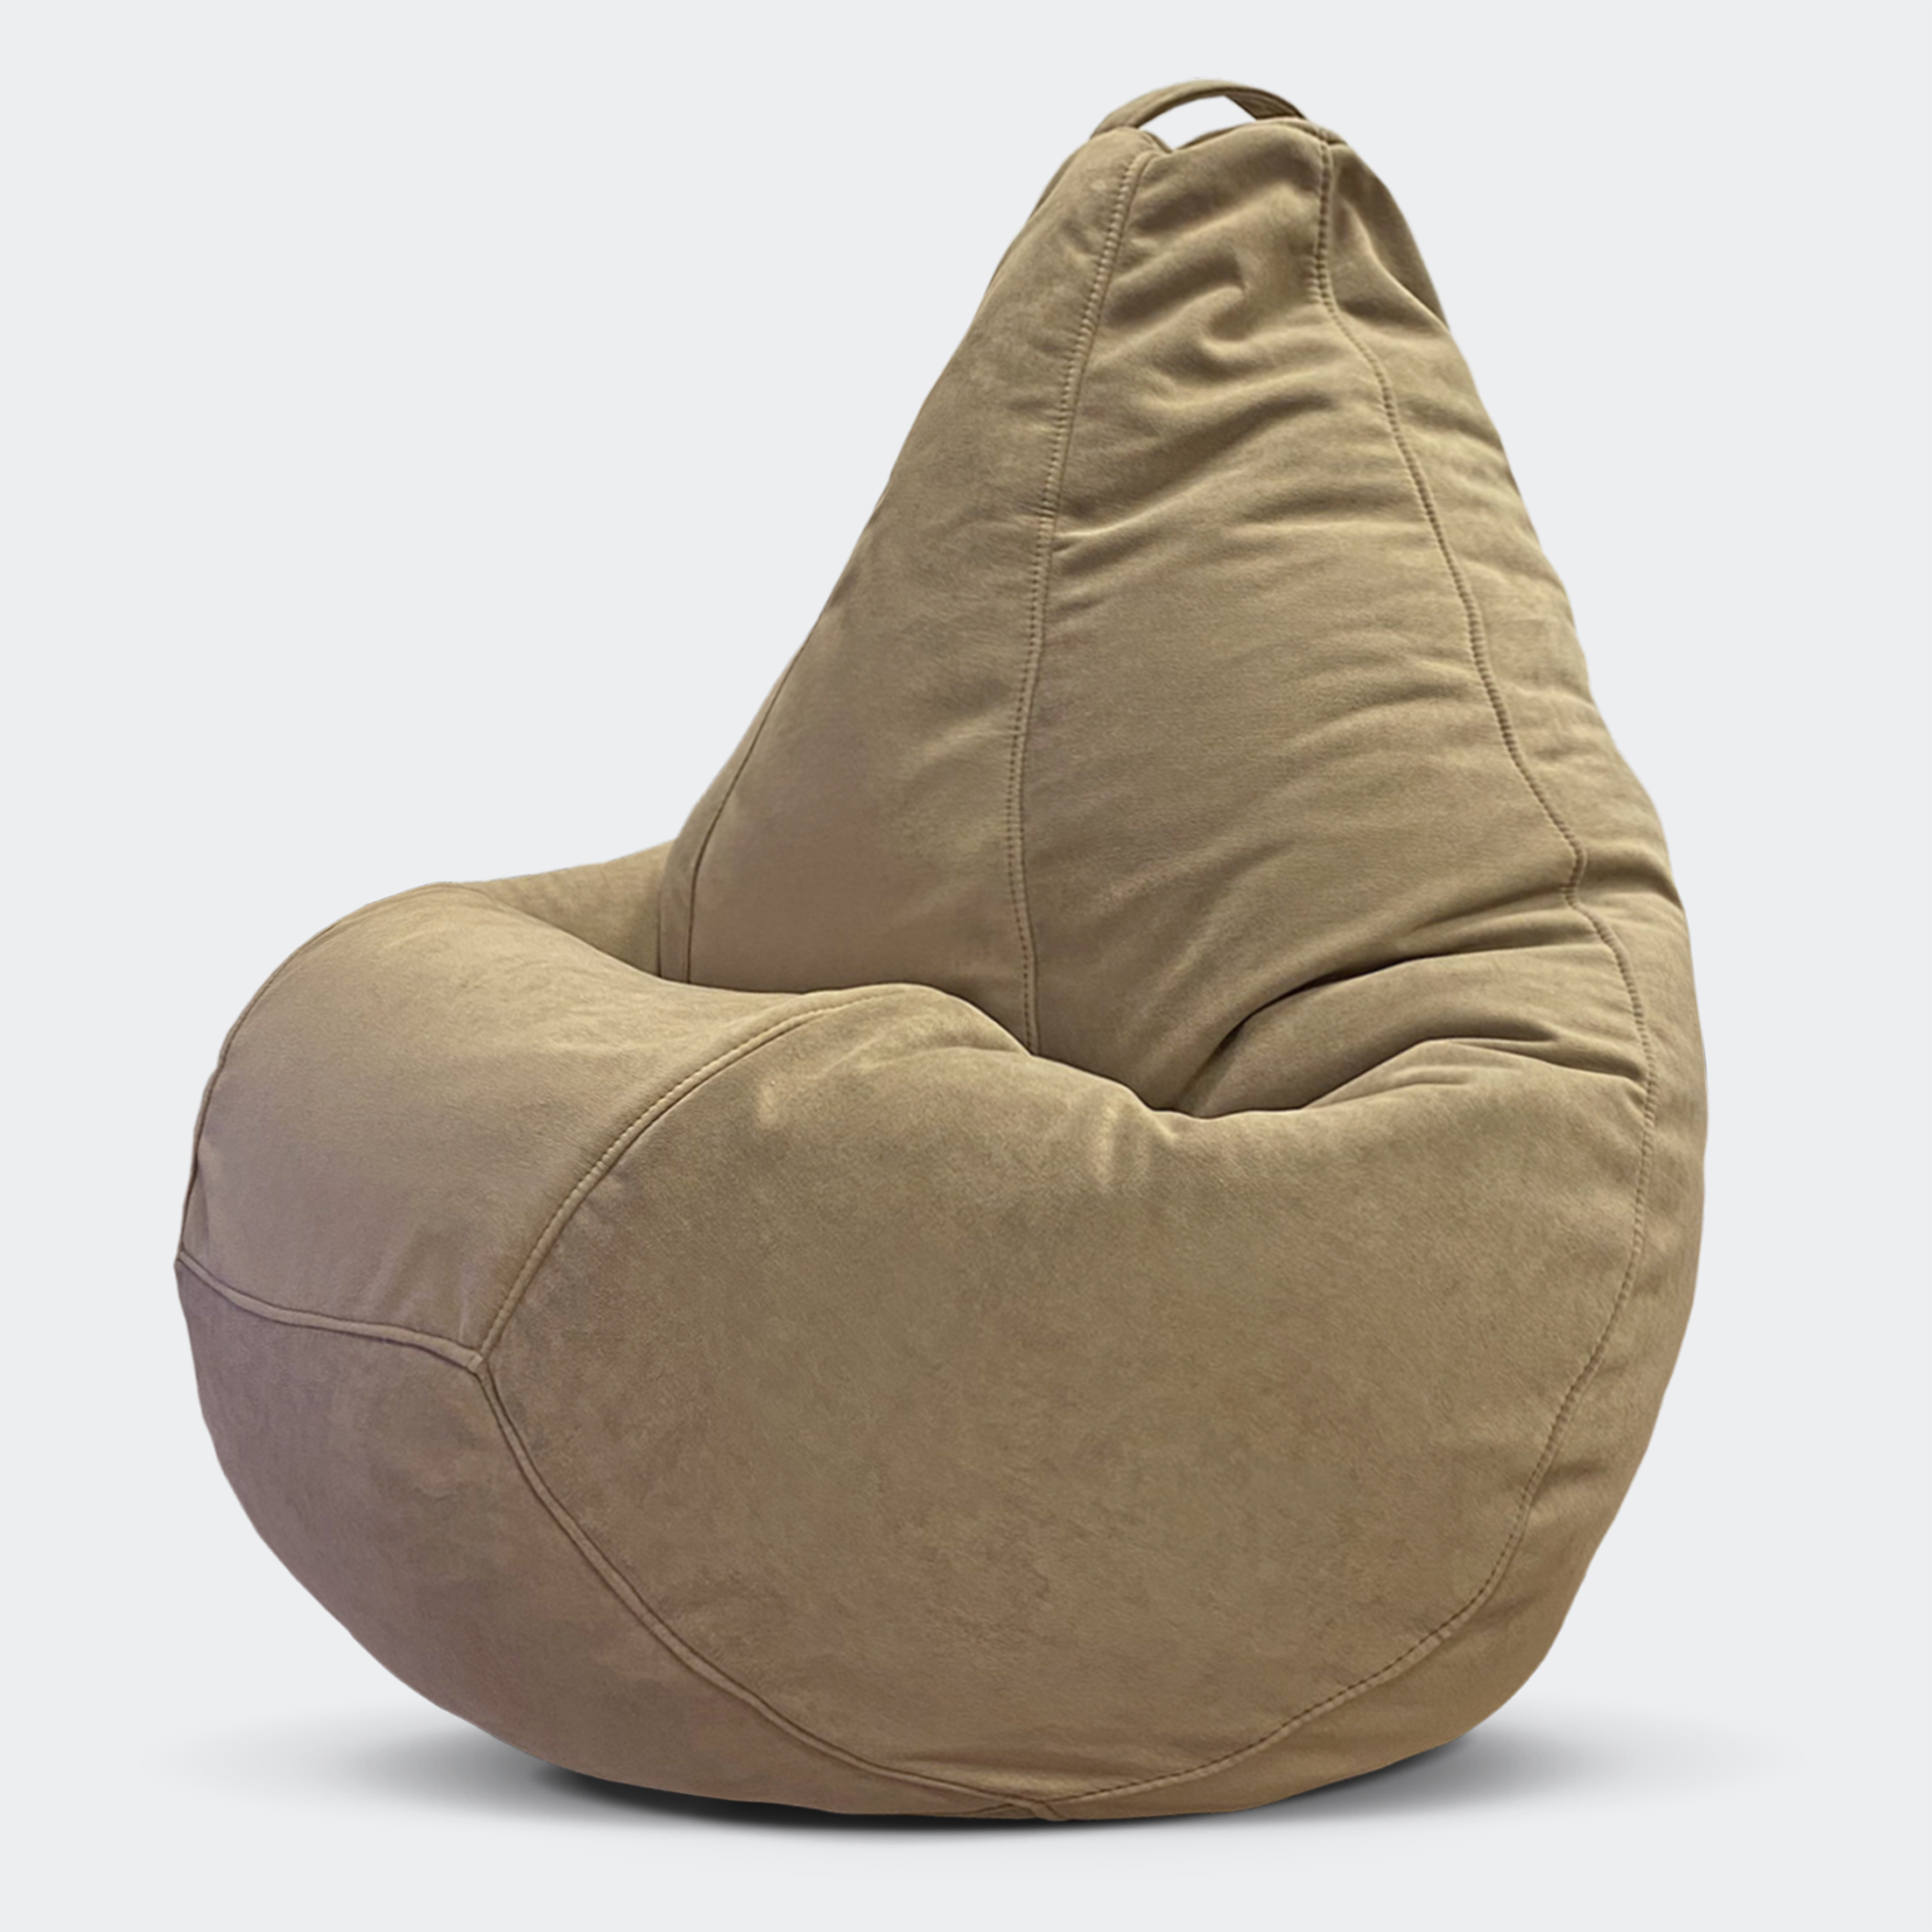 фото Кресло-мешок puflove пуфик груша, размер xxl, темно-бежевый велюр